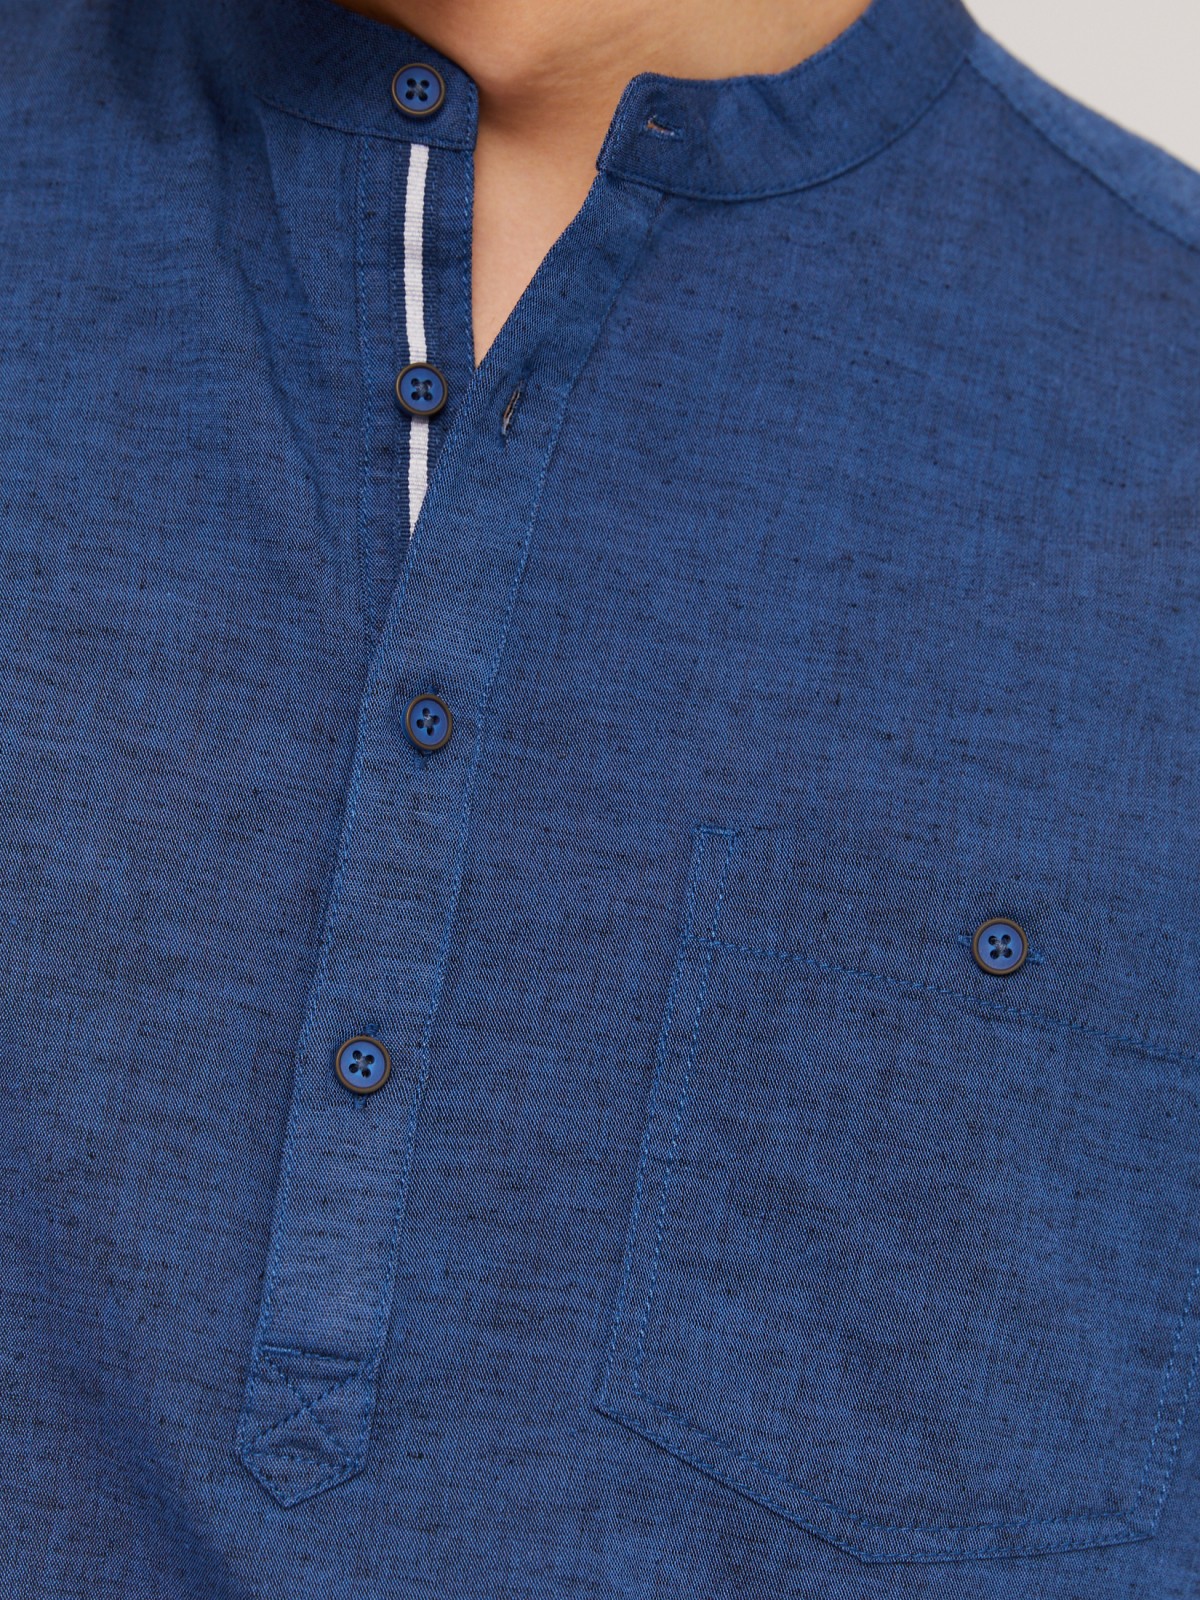 Льняная рубашка с коротким рукавом zolla 014242262013, цвет голубой, размер M - фото 4